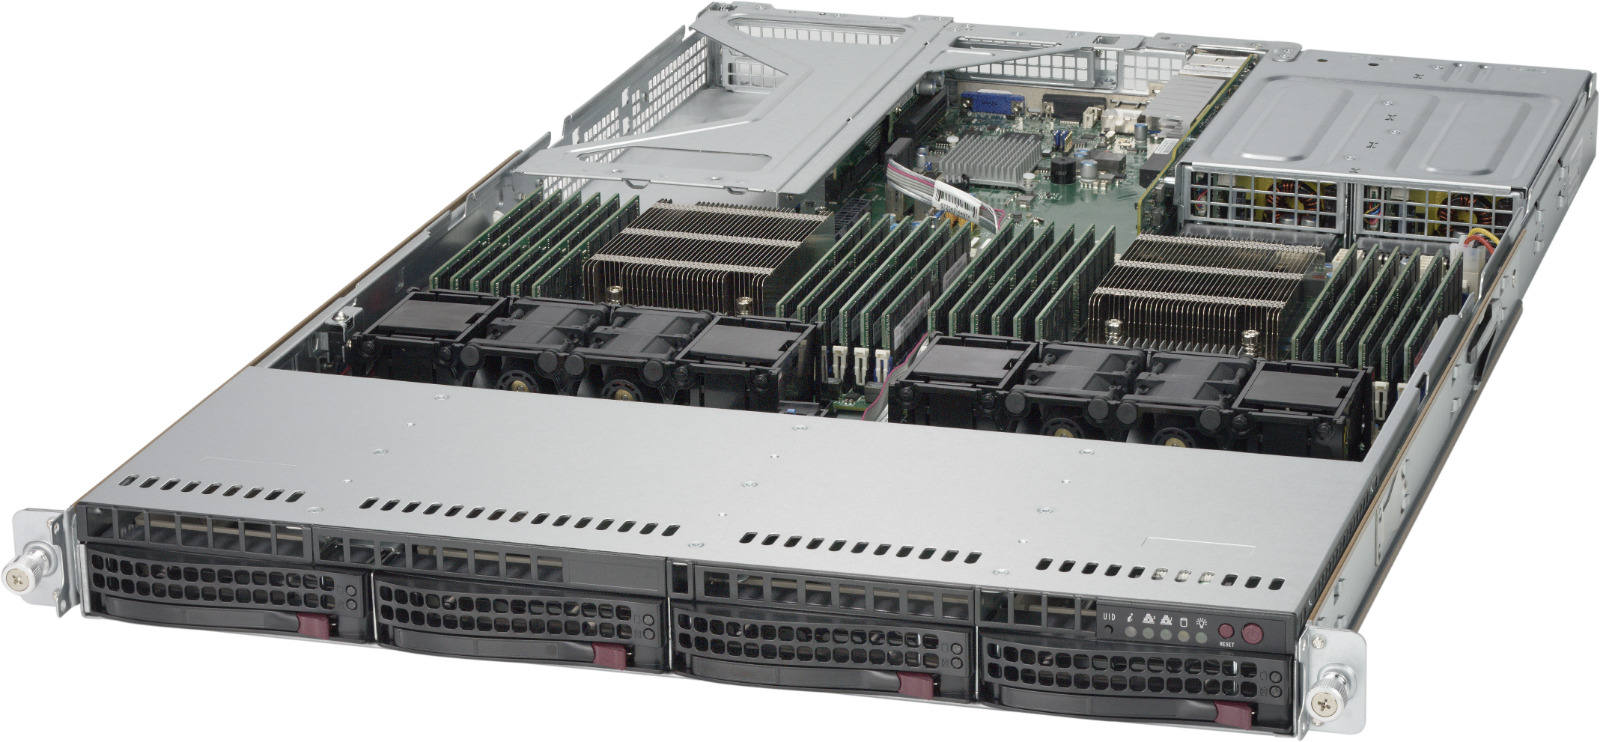 1U UXS Server X10DRU-i+ Xeon 36 Cores 32GB DDR4 RAM 4x 10GBE OB+ X520-DA2 2x PSU